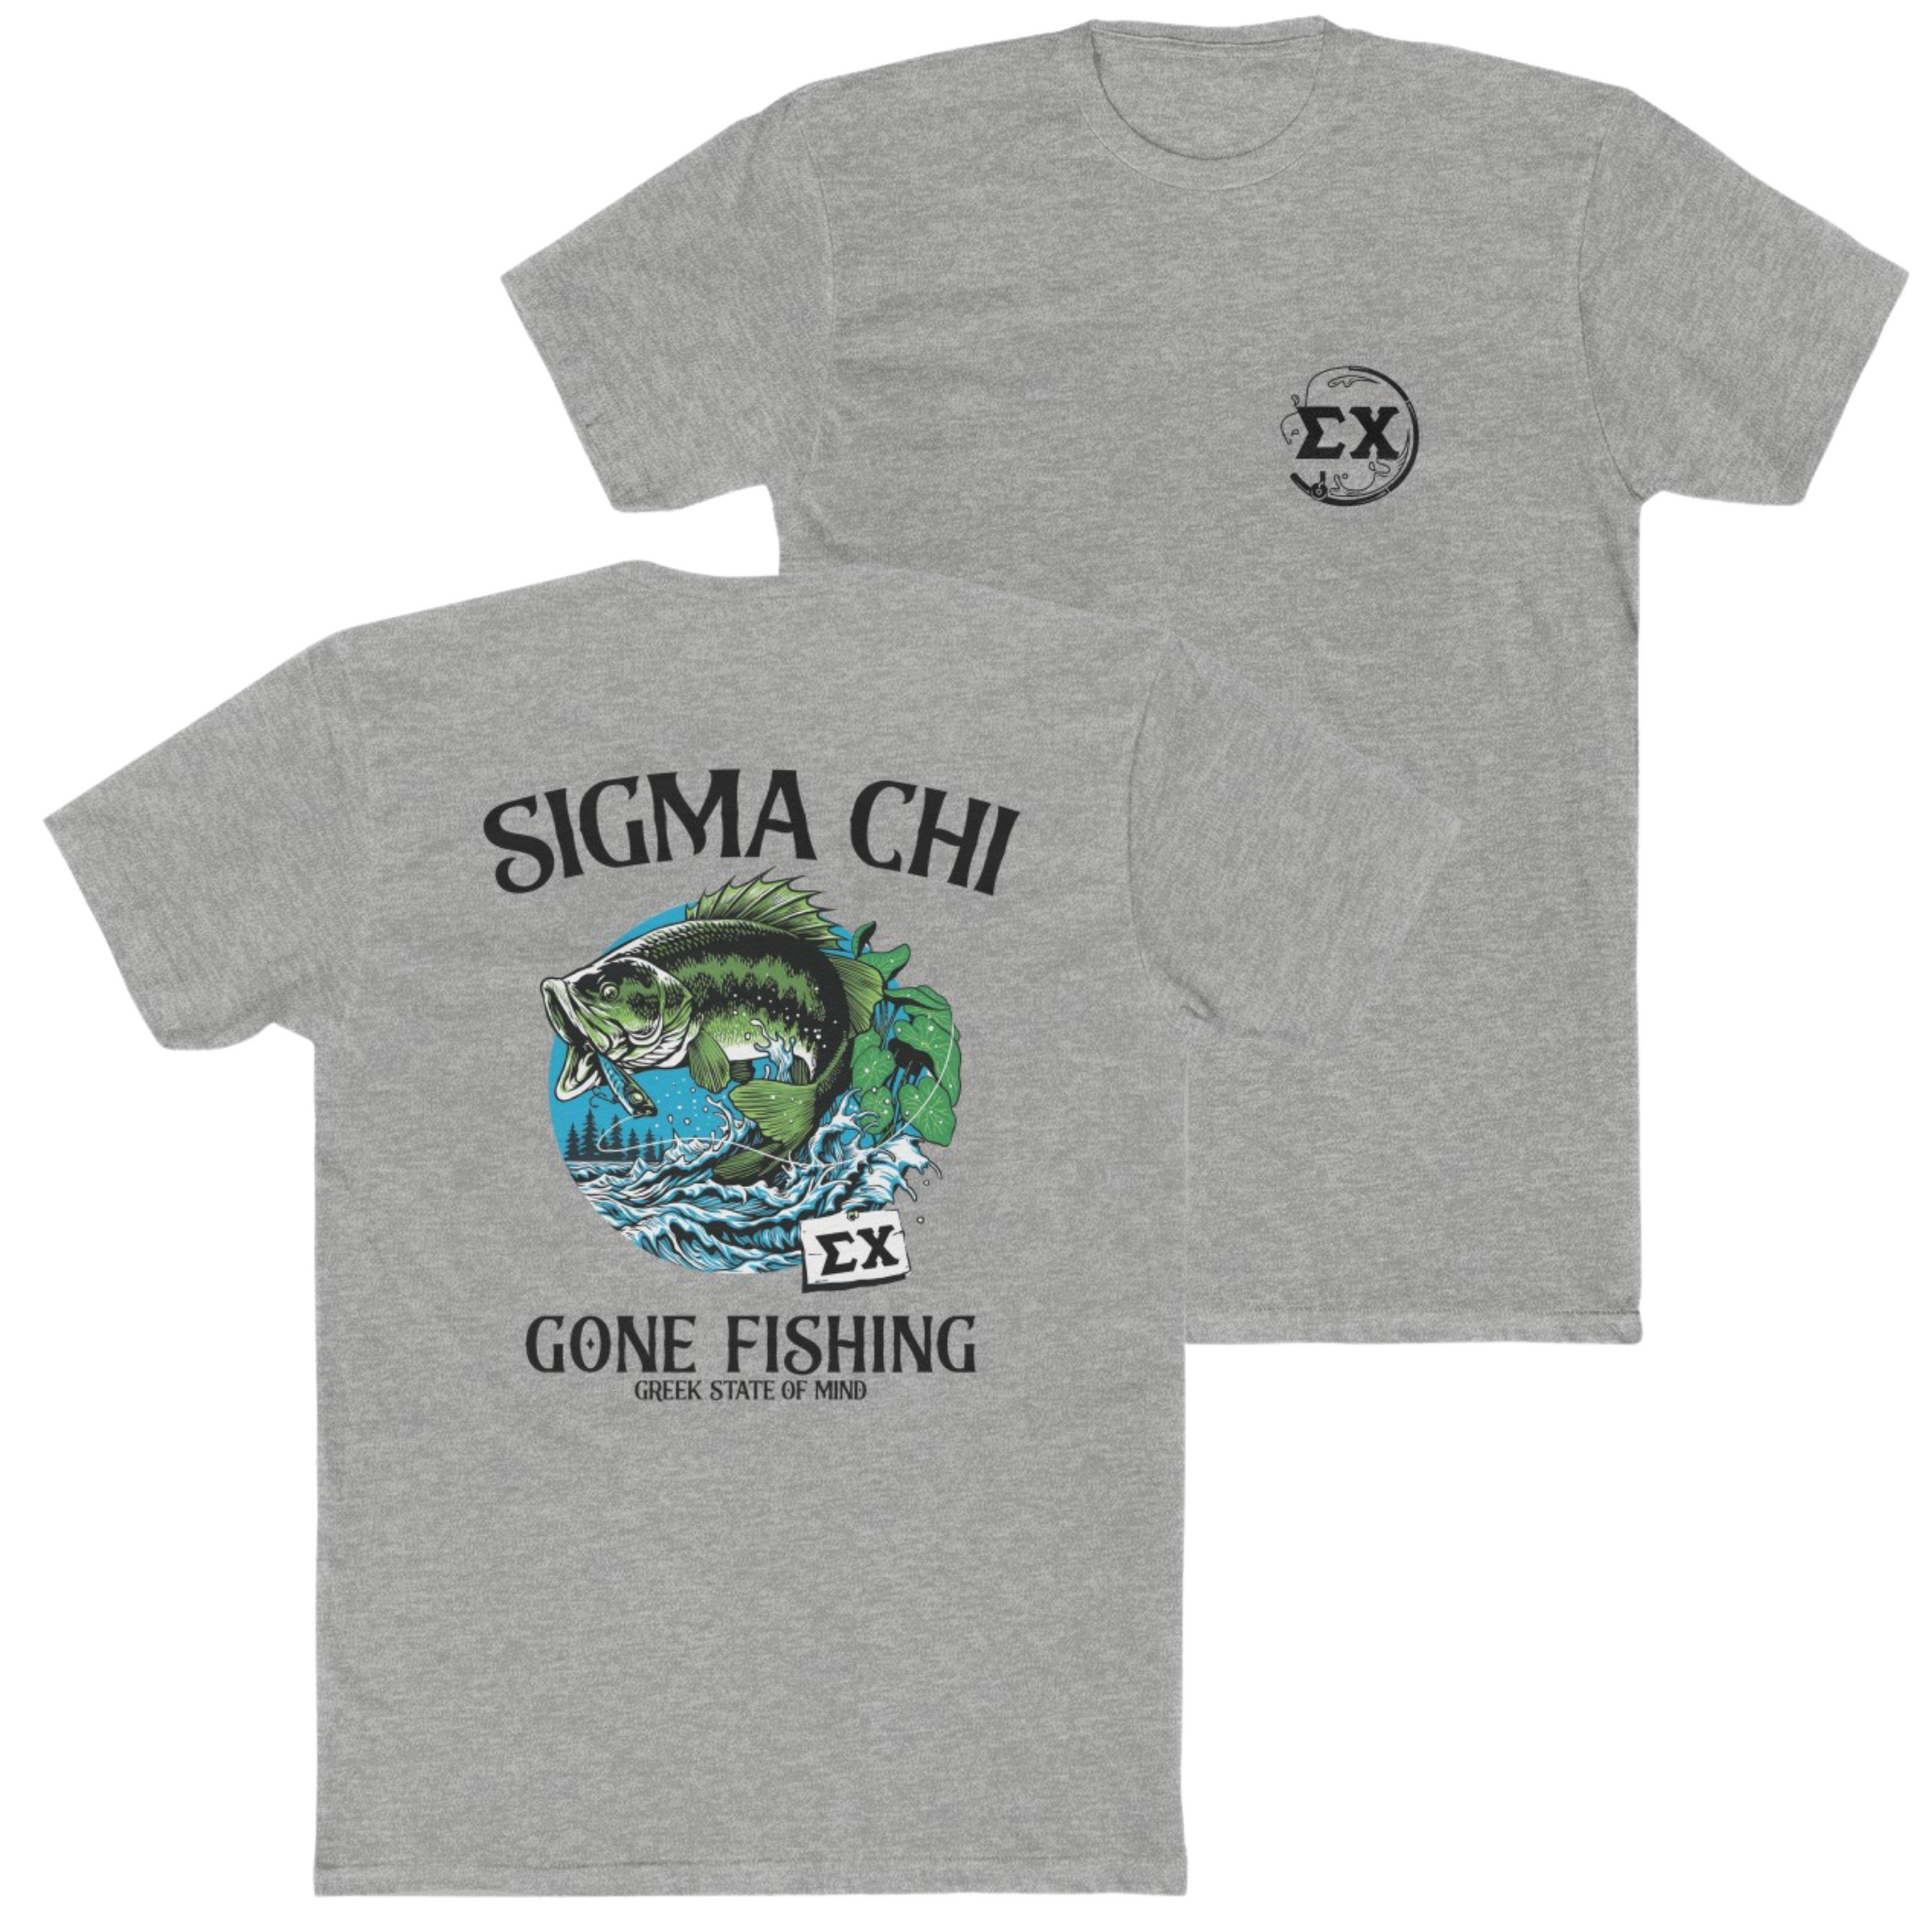 Grey Sigma Chi Graphic T-Shirt | Gone Fishing | Sigma Chi Fraternity Apparel